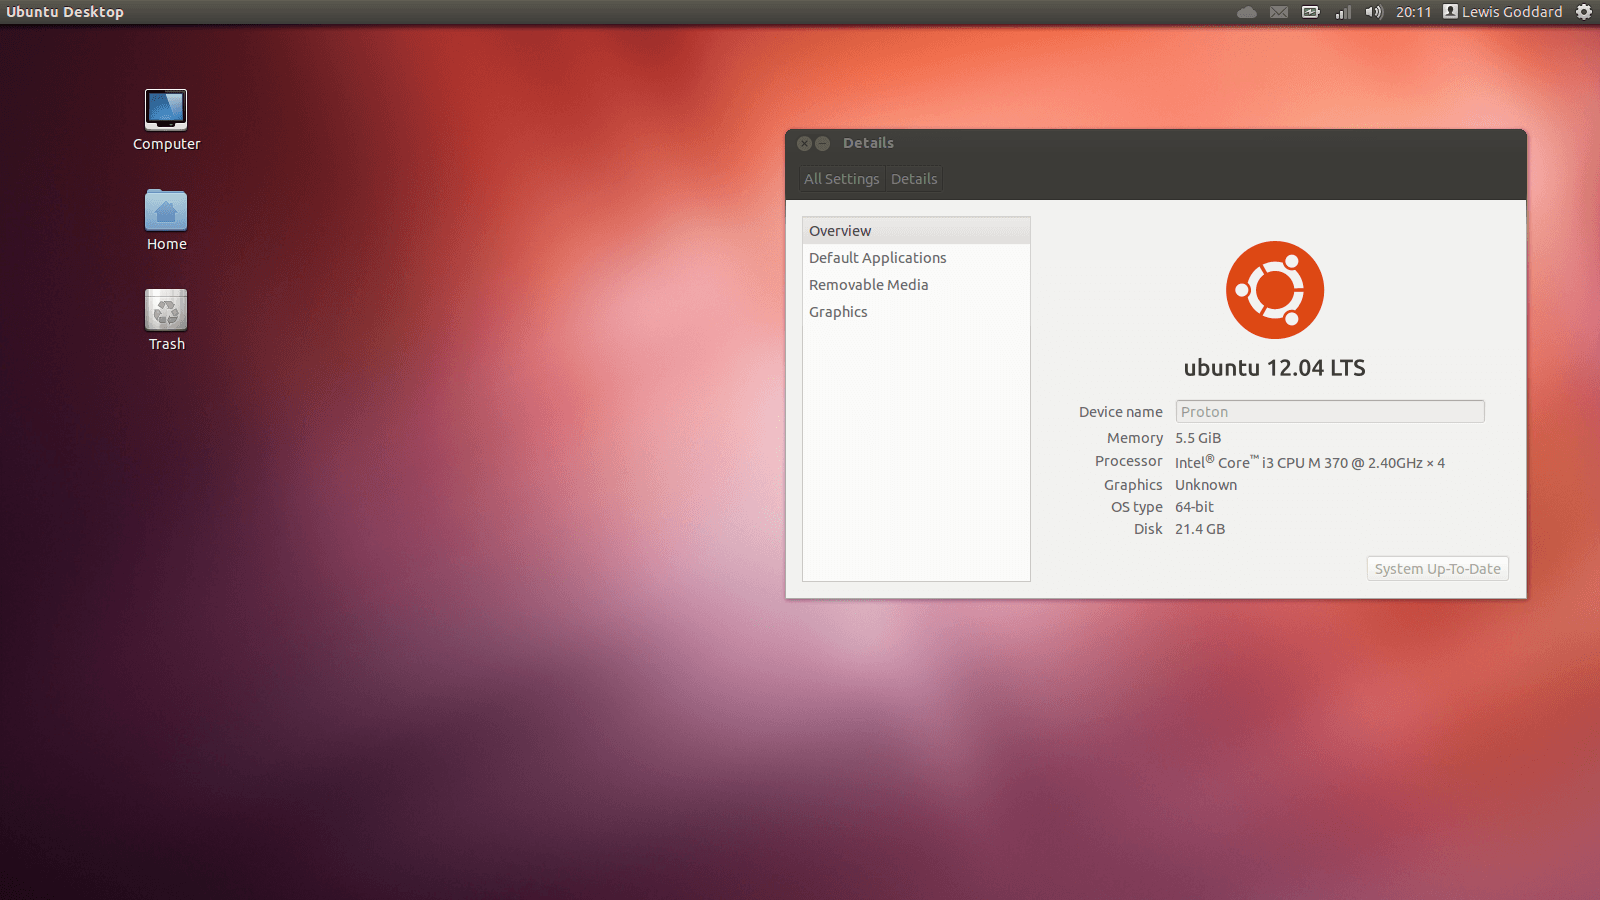 This computer is running 64bit Ubuntu